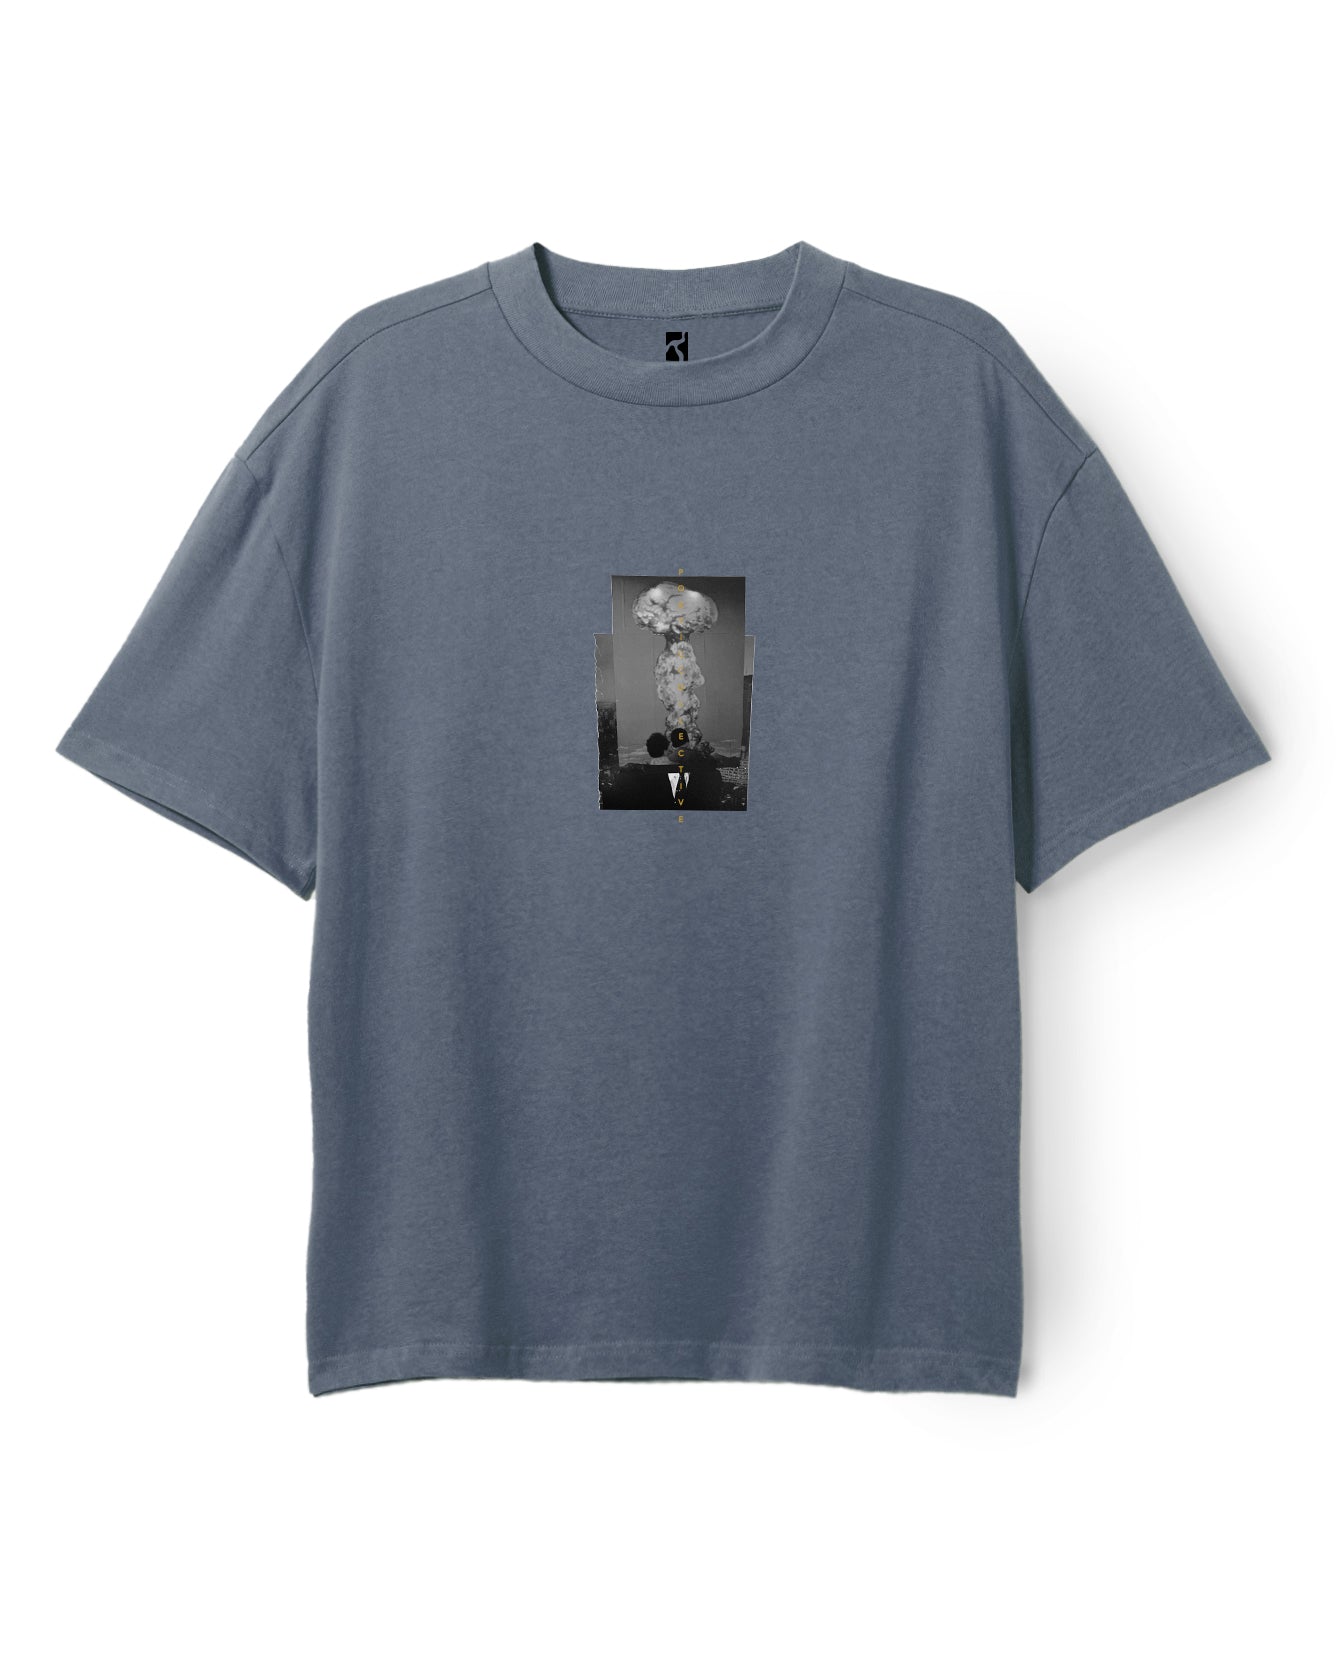 Poetic Collective - Big Bang T-Shirt Mineral Grey